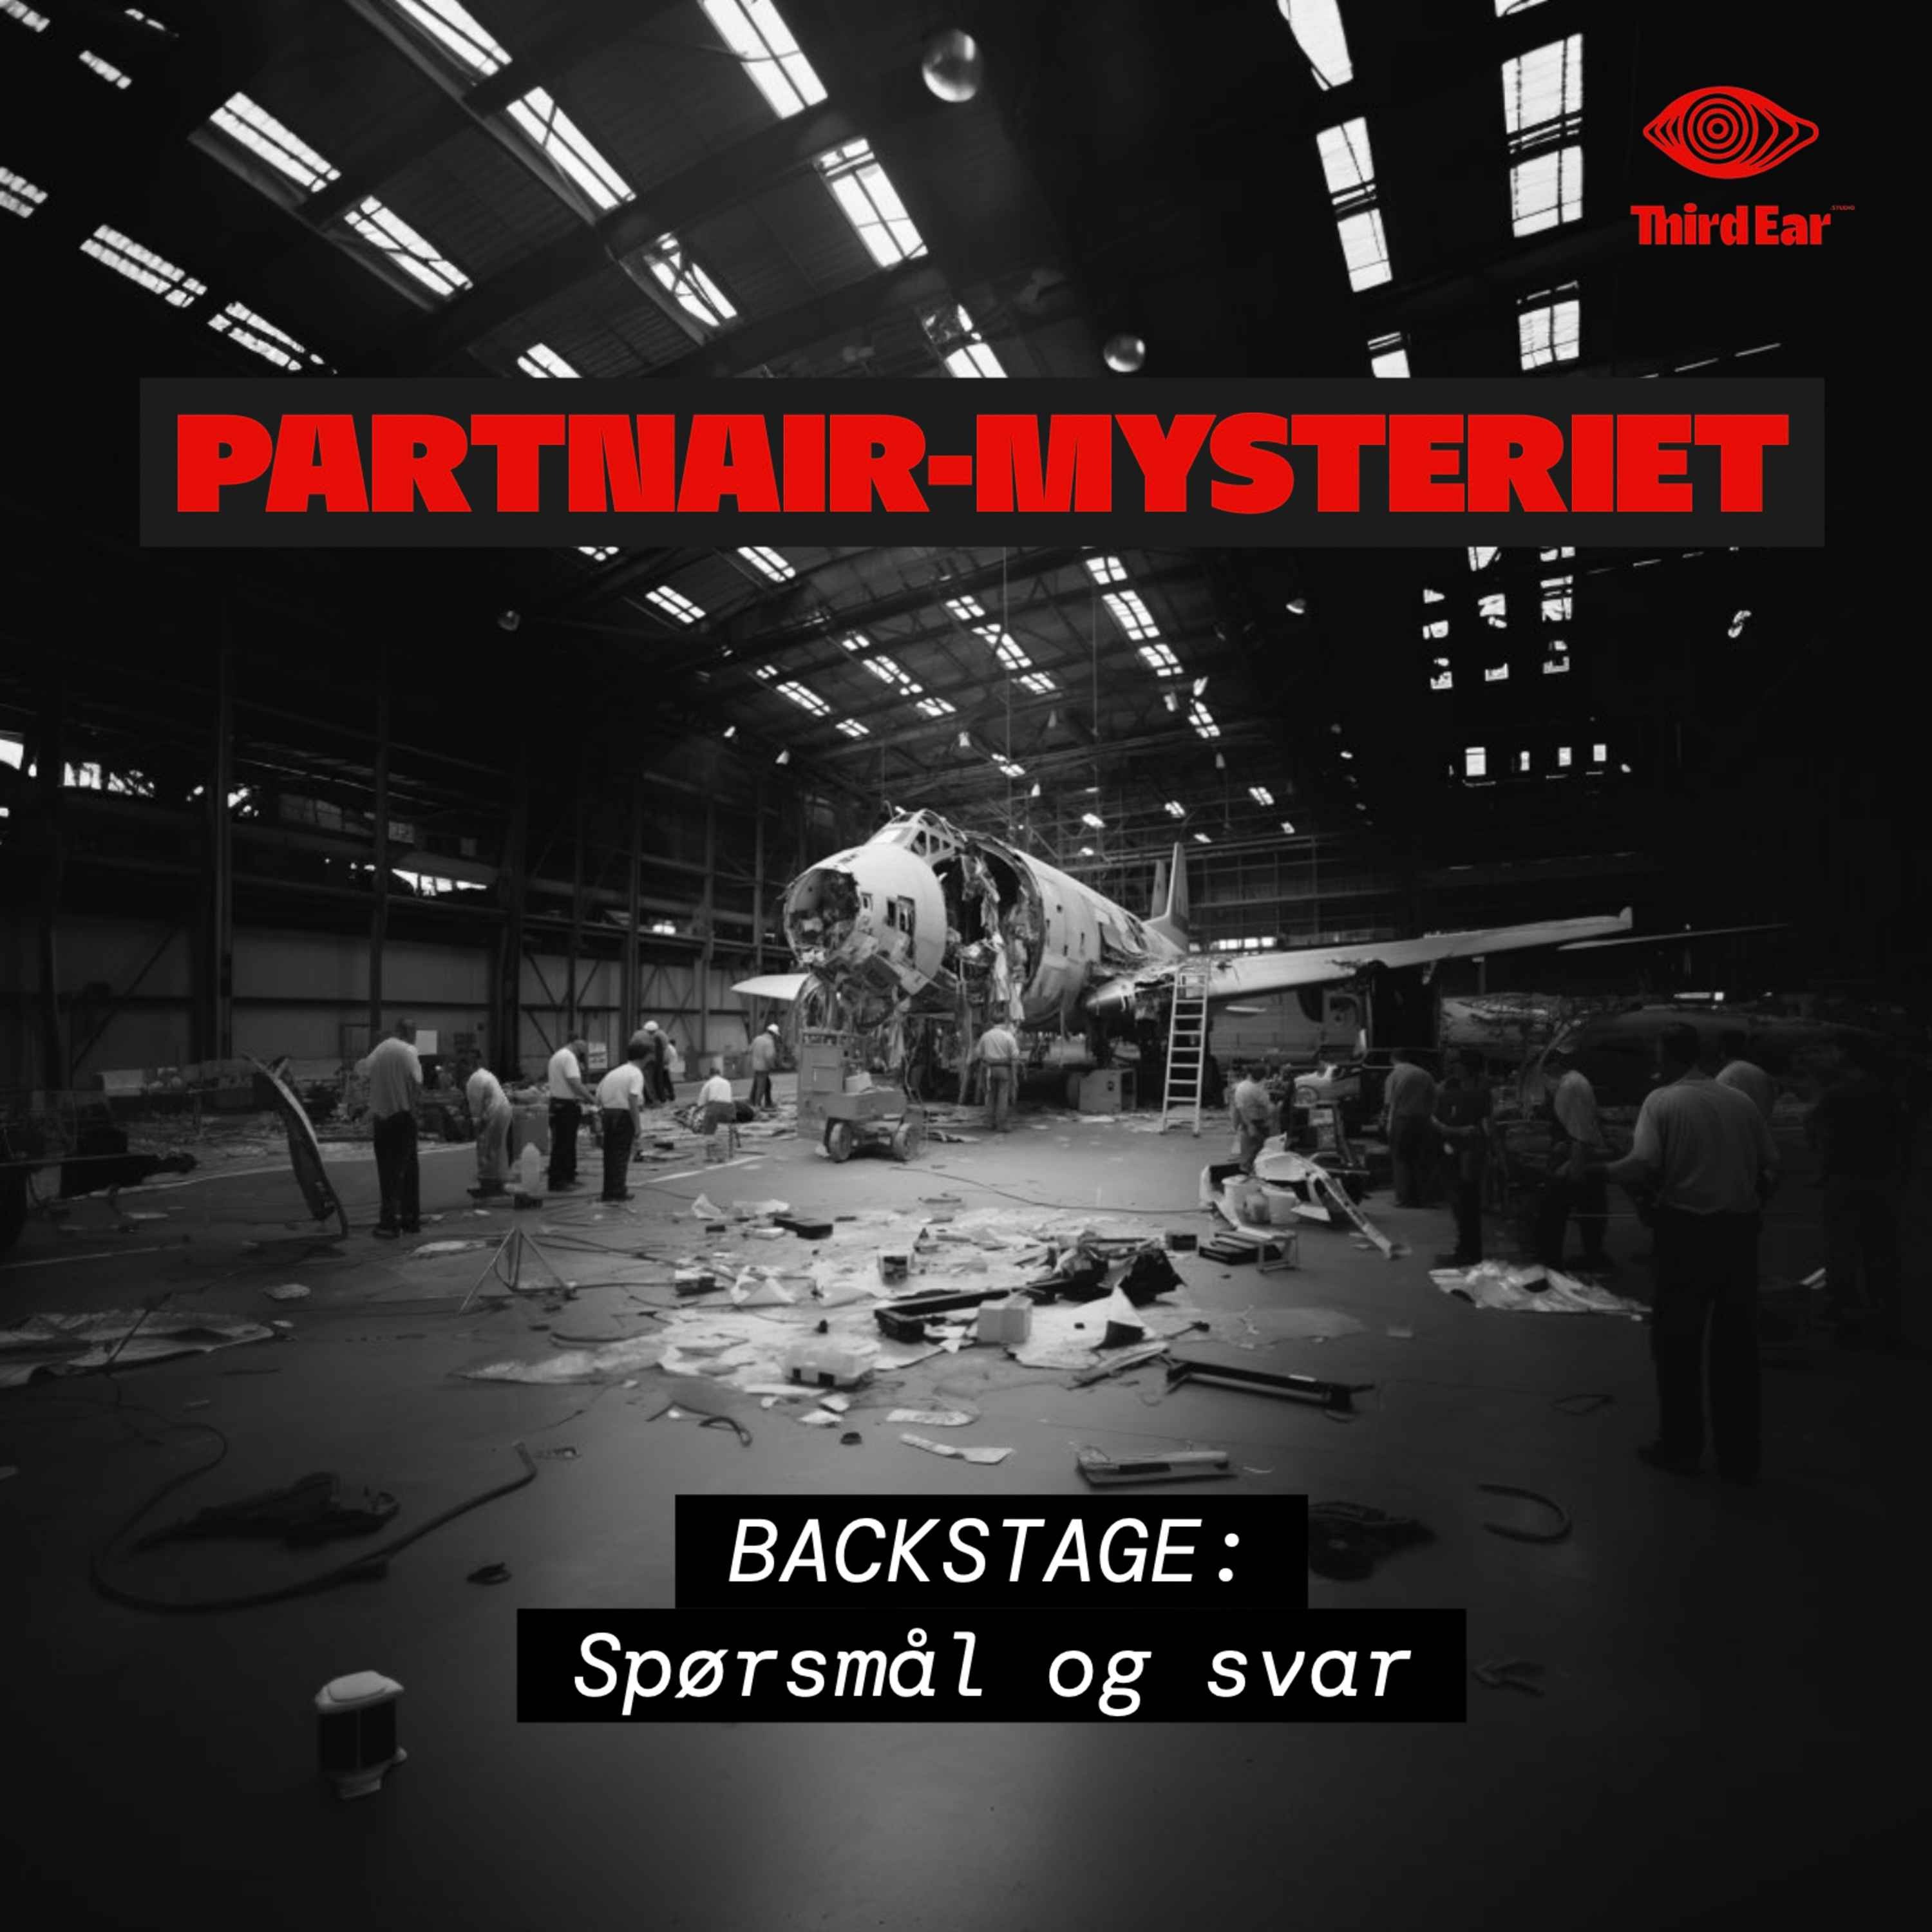 Partnair-mysteriet - Backstage: Spørsmål og svar